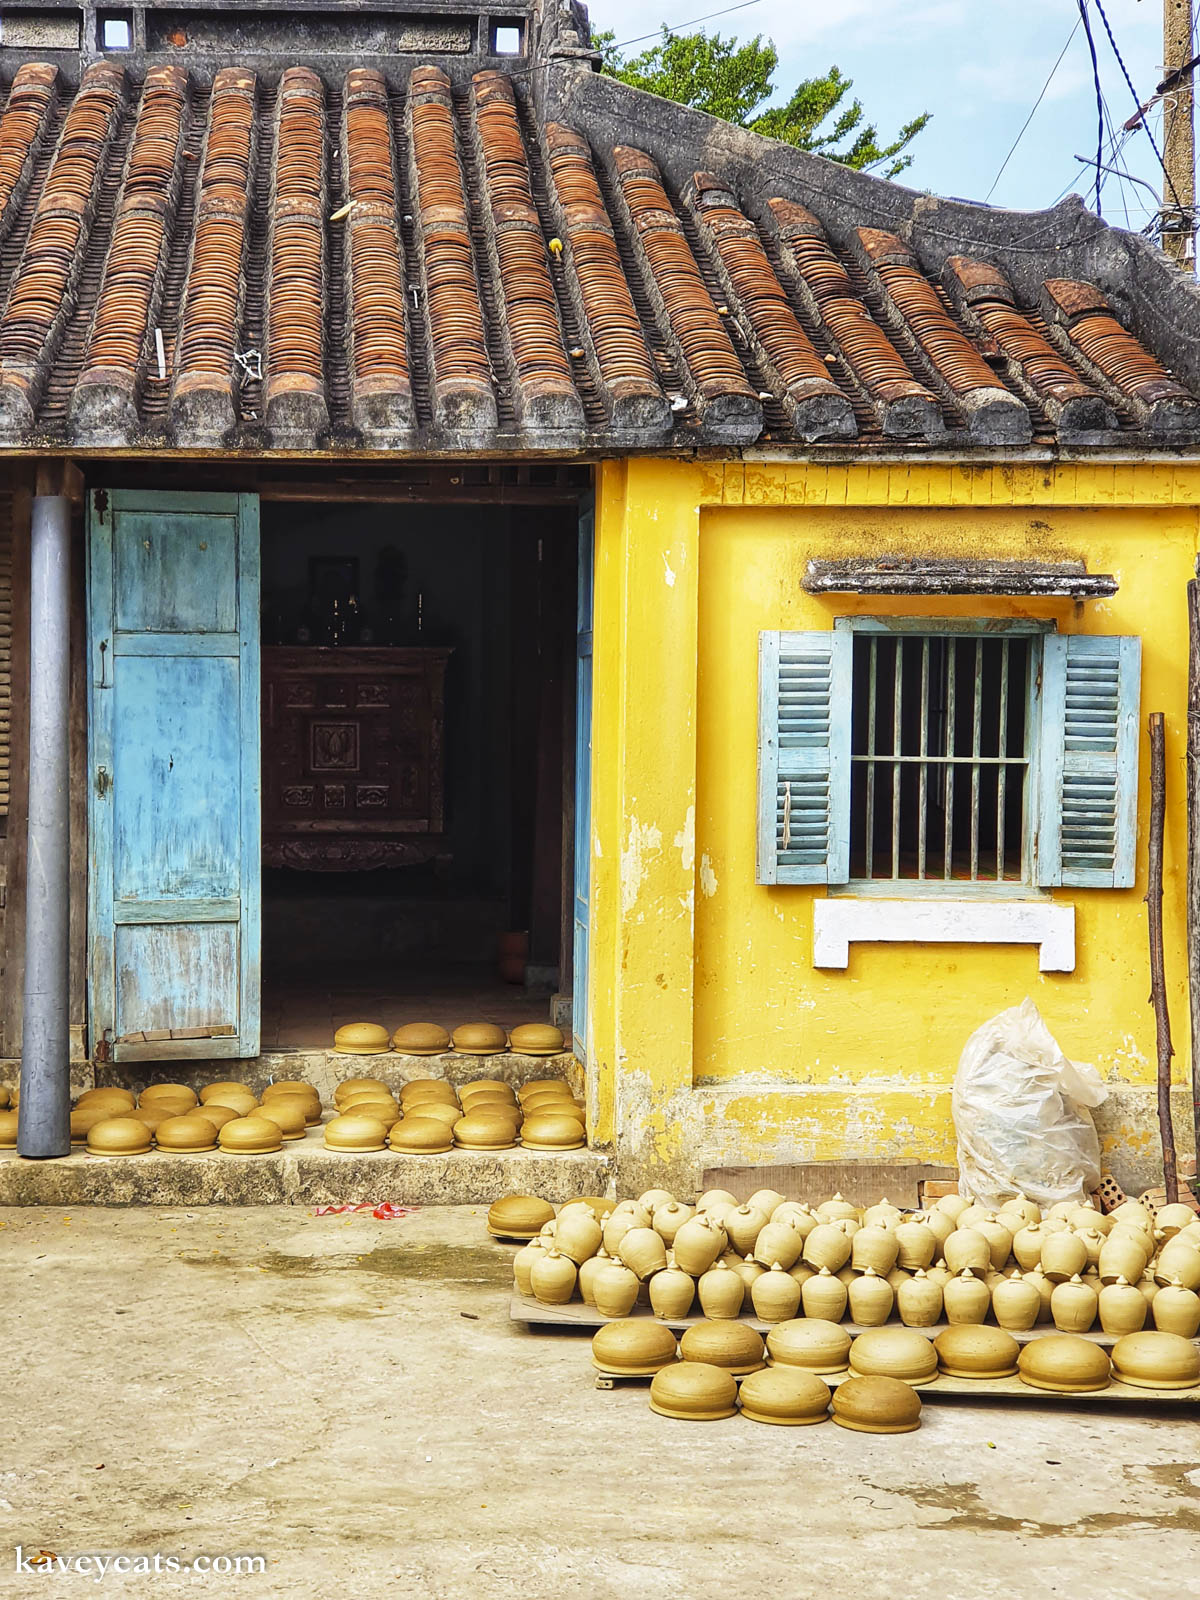 Pottery village near Market in Hoi An, Vietnam